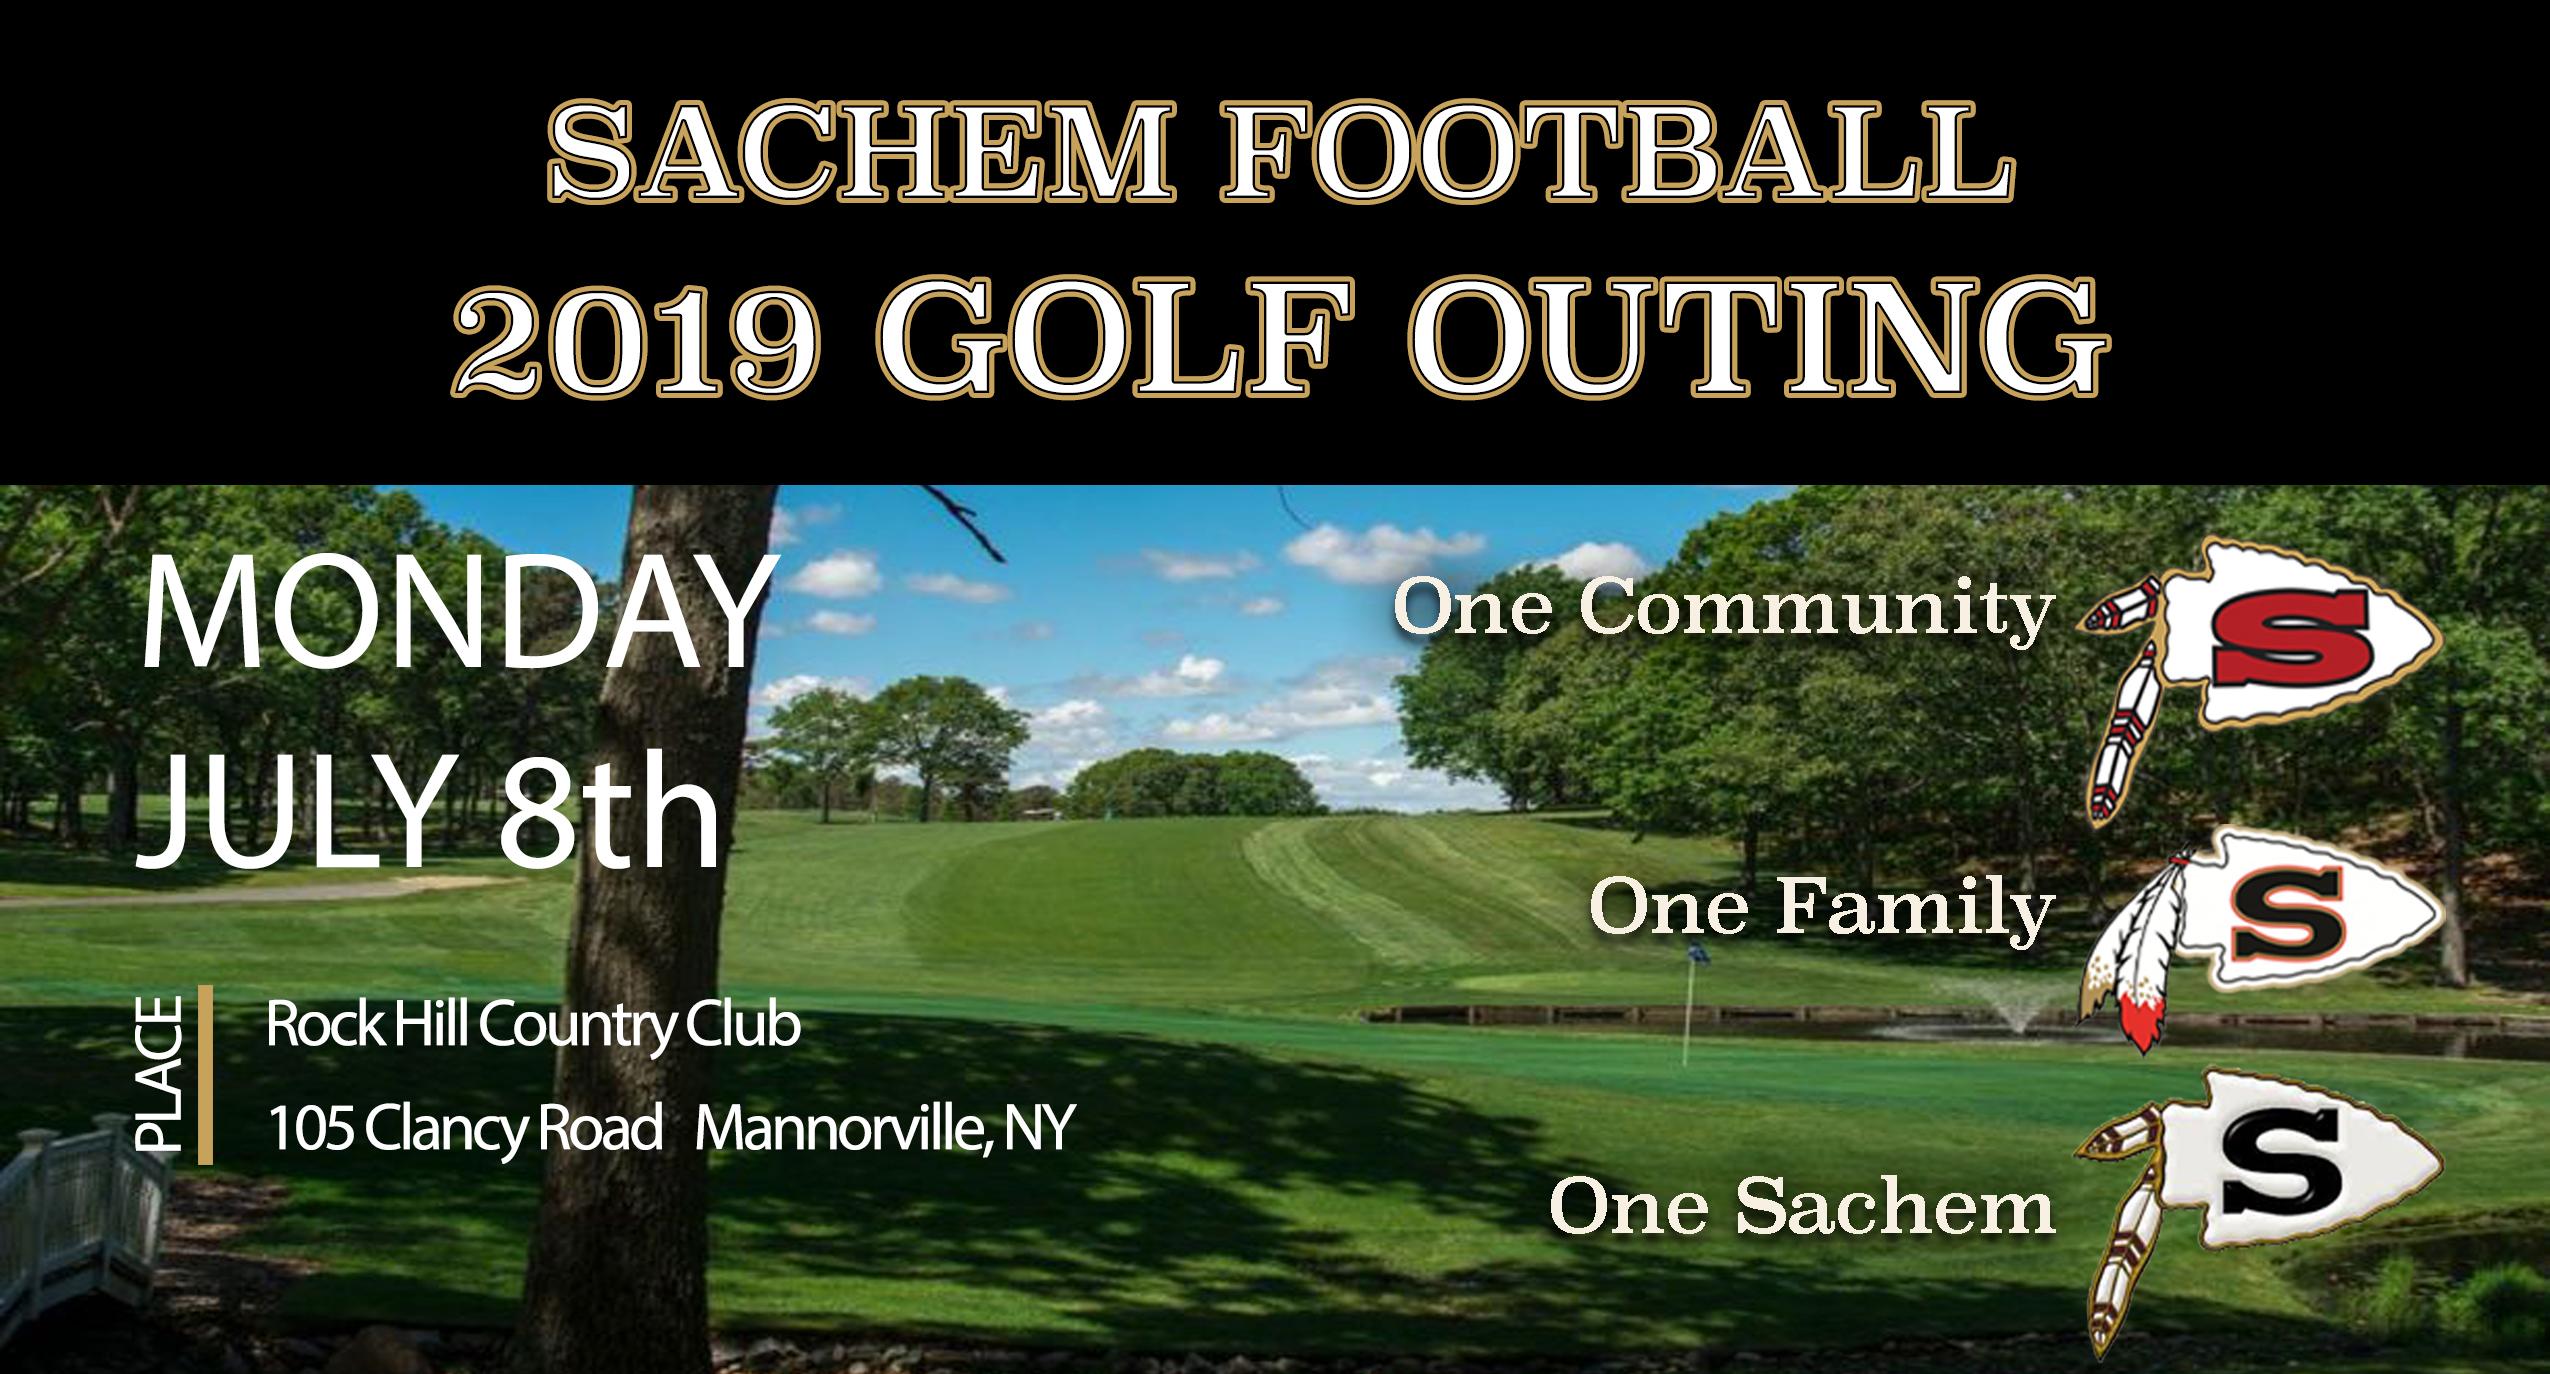 2019 Sachem Football Golf Outing